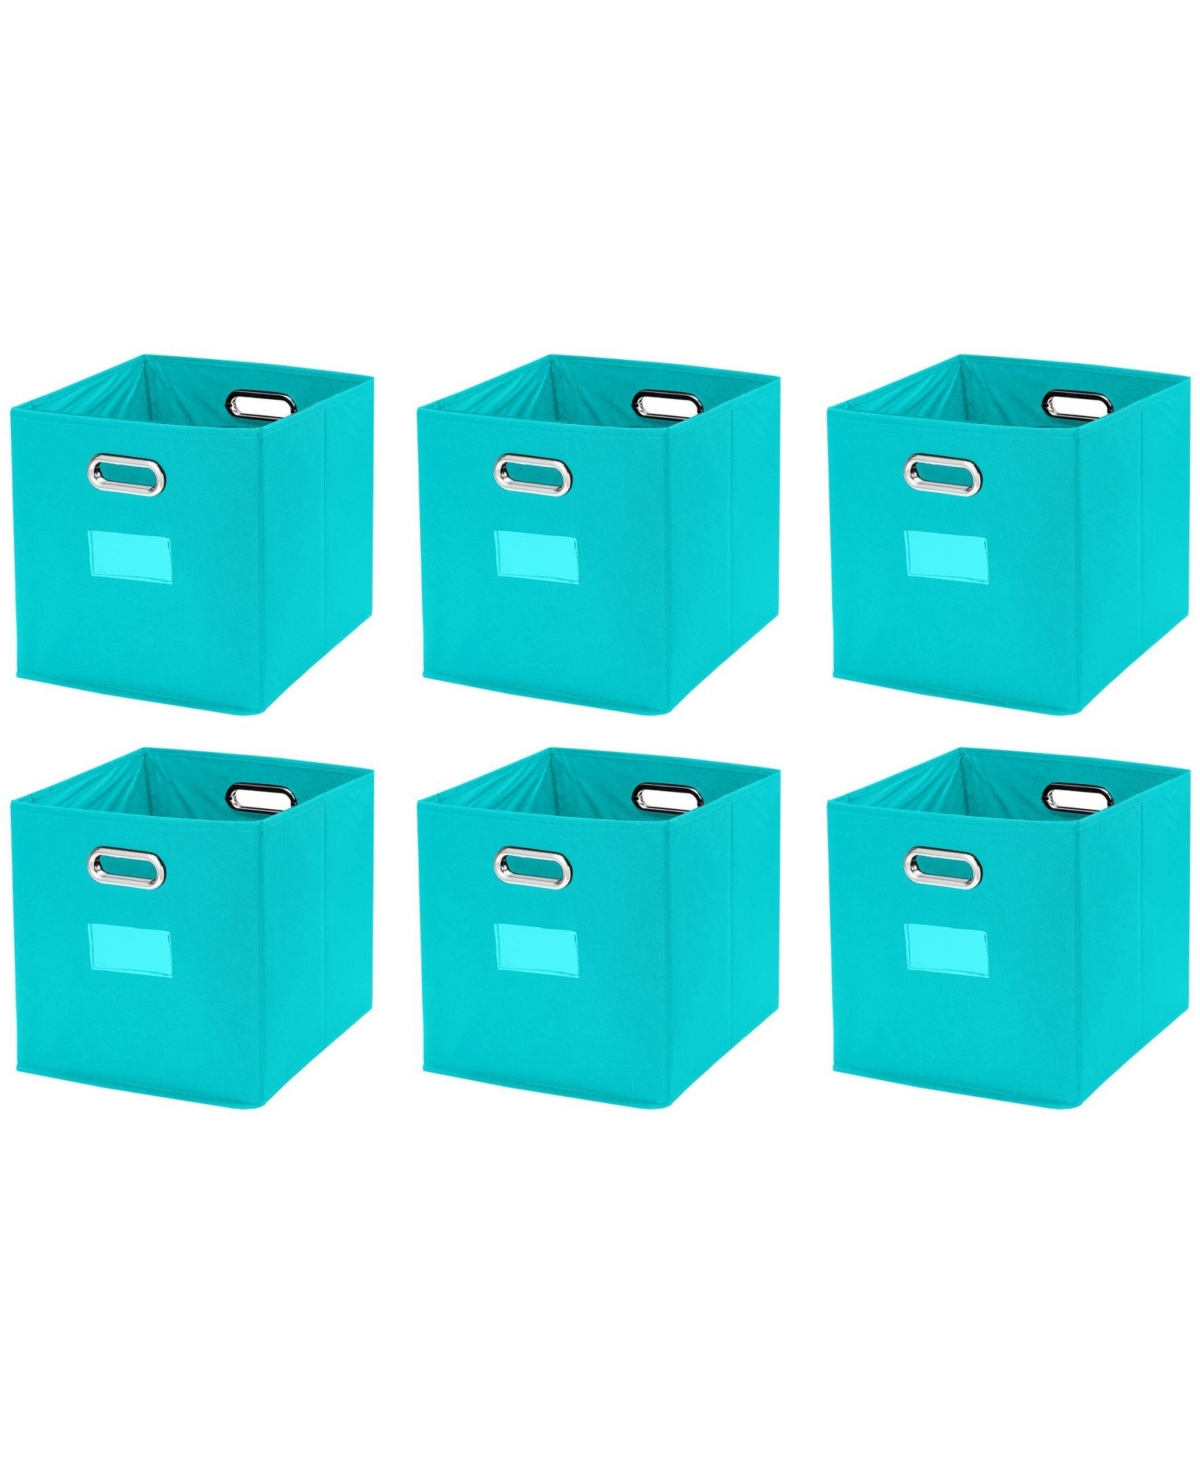 6-Pack. Folding Storage Bins - Teal